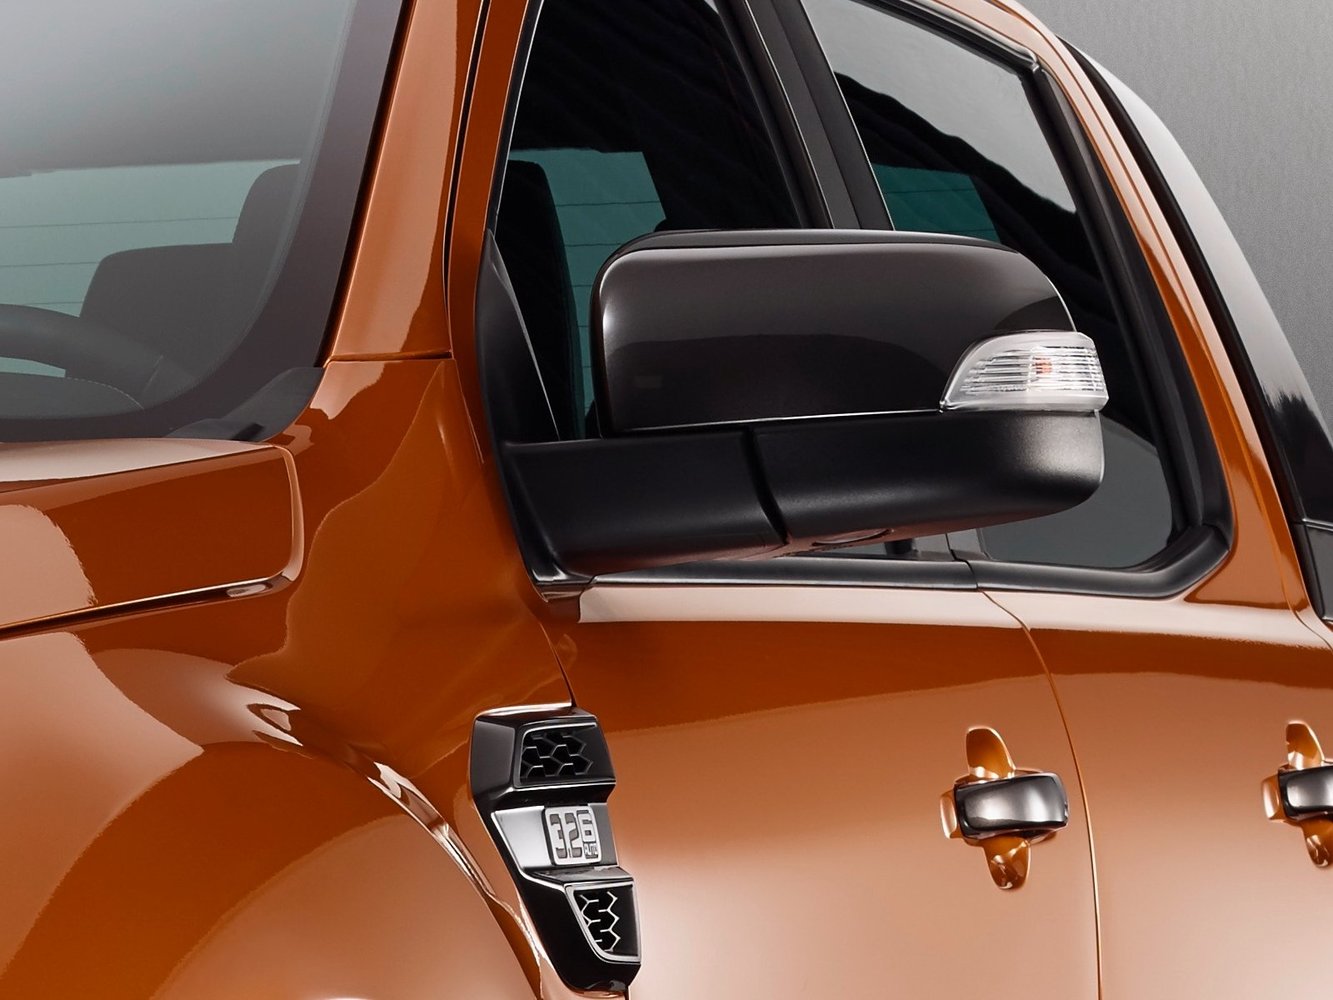 пикап 4 дв. Ford Ranger 2015 - 2016г выпуска модификация 2.2 AT (160 л.с.)